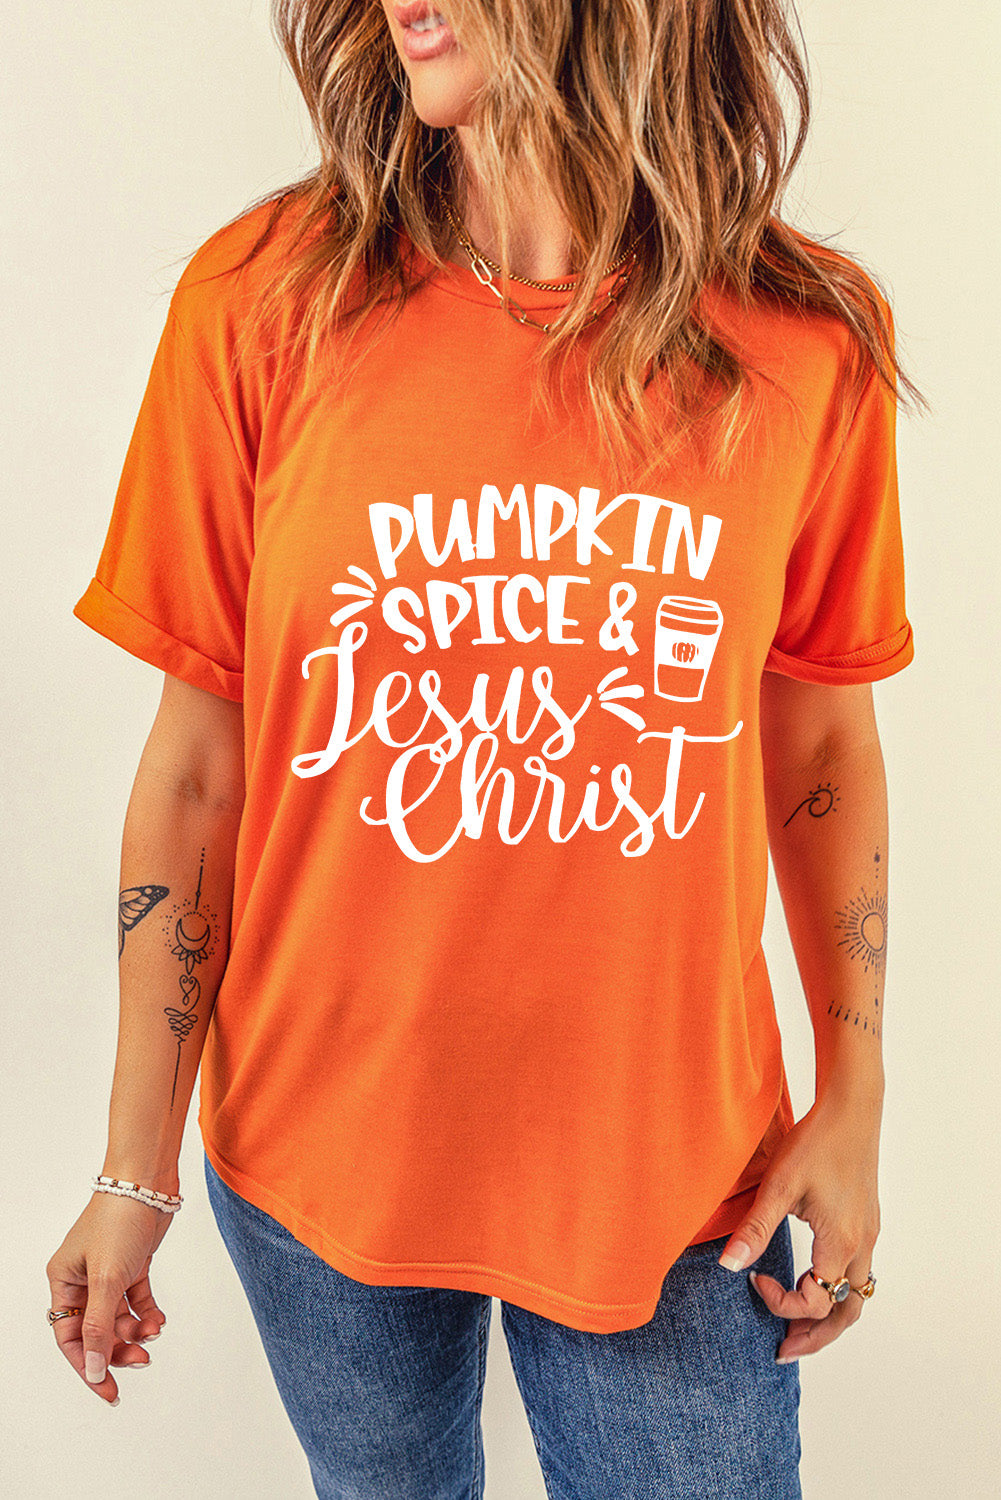 LC25222678-14-S, LC25222678-14-M, LC25222678-14-L, LC25222678-14-XL, LC25222678-14-2XL, Orange PUMPKIN SPICE & Jesus Christ Graphic T-shirt